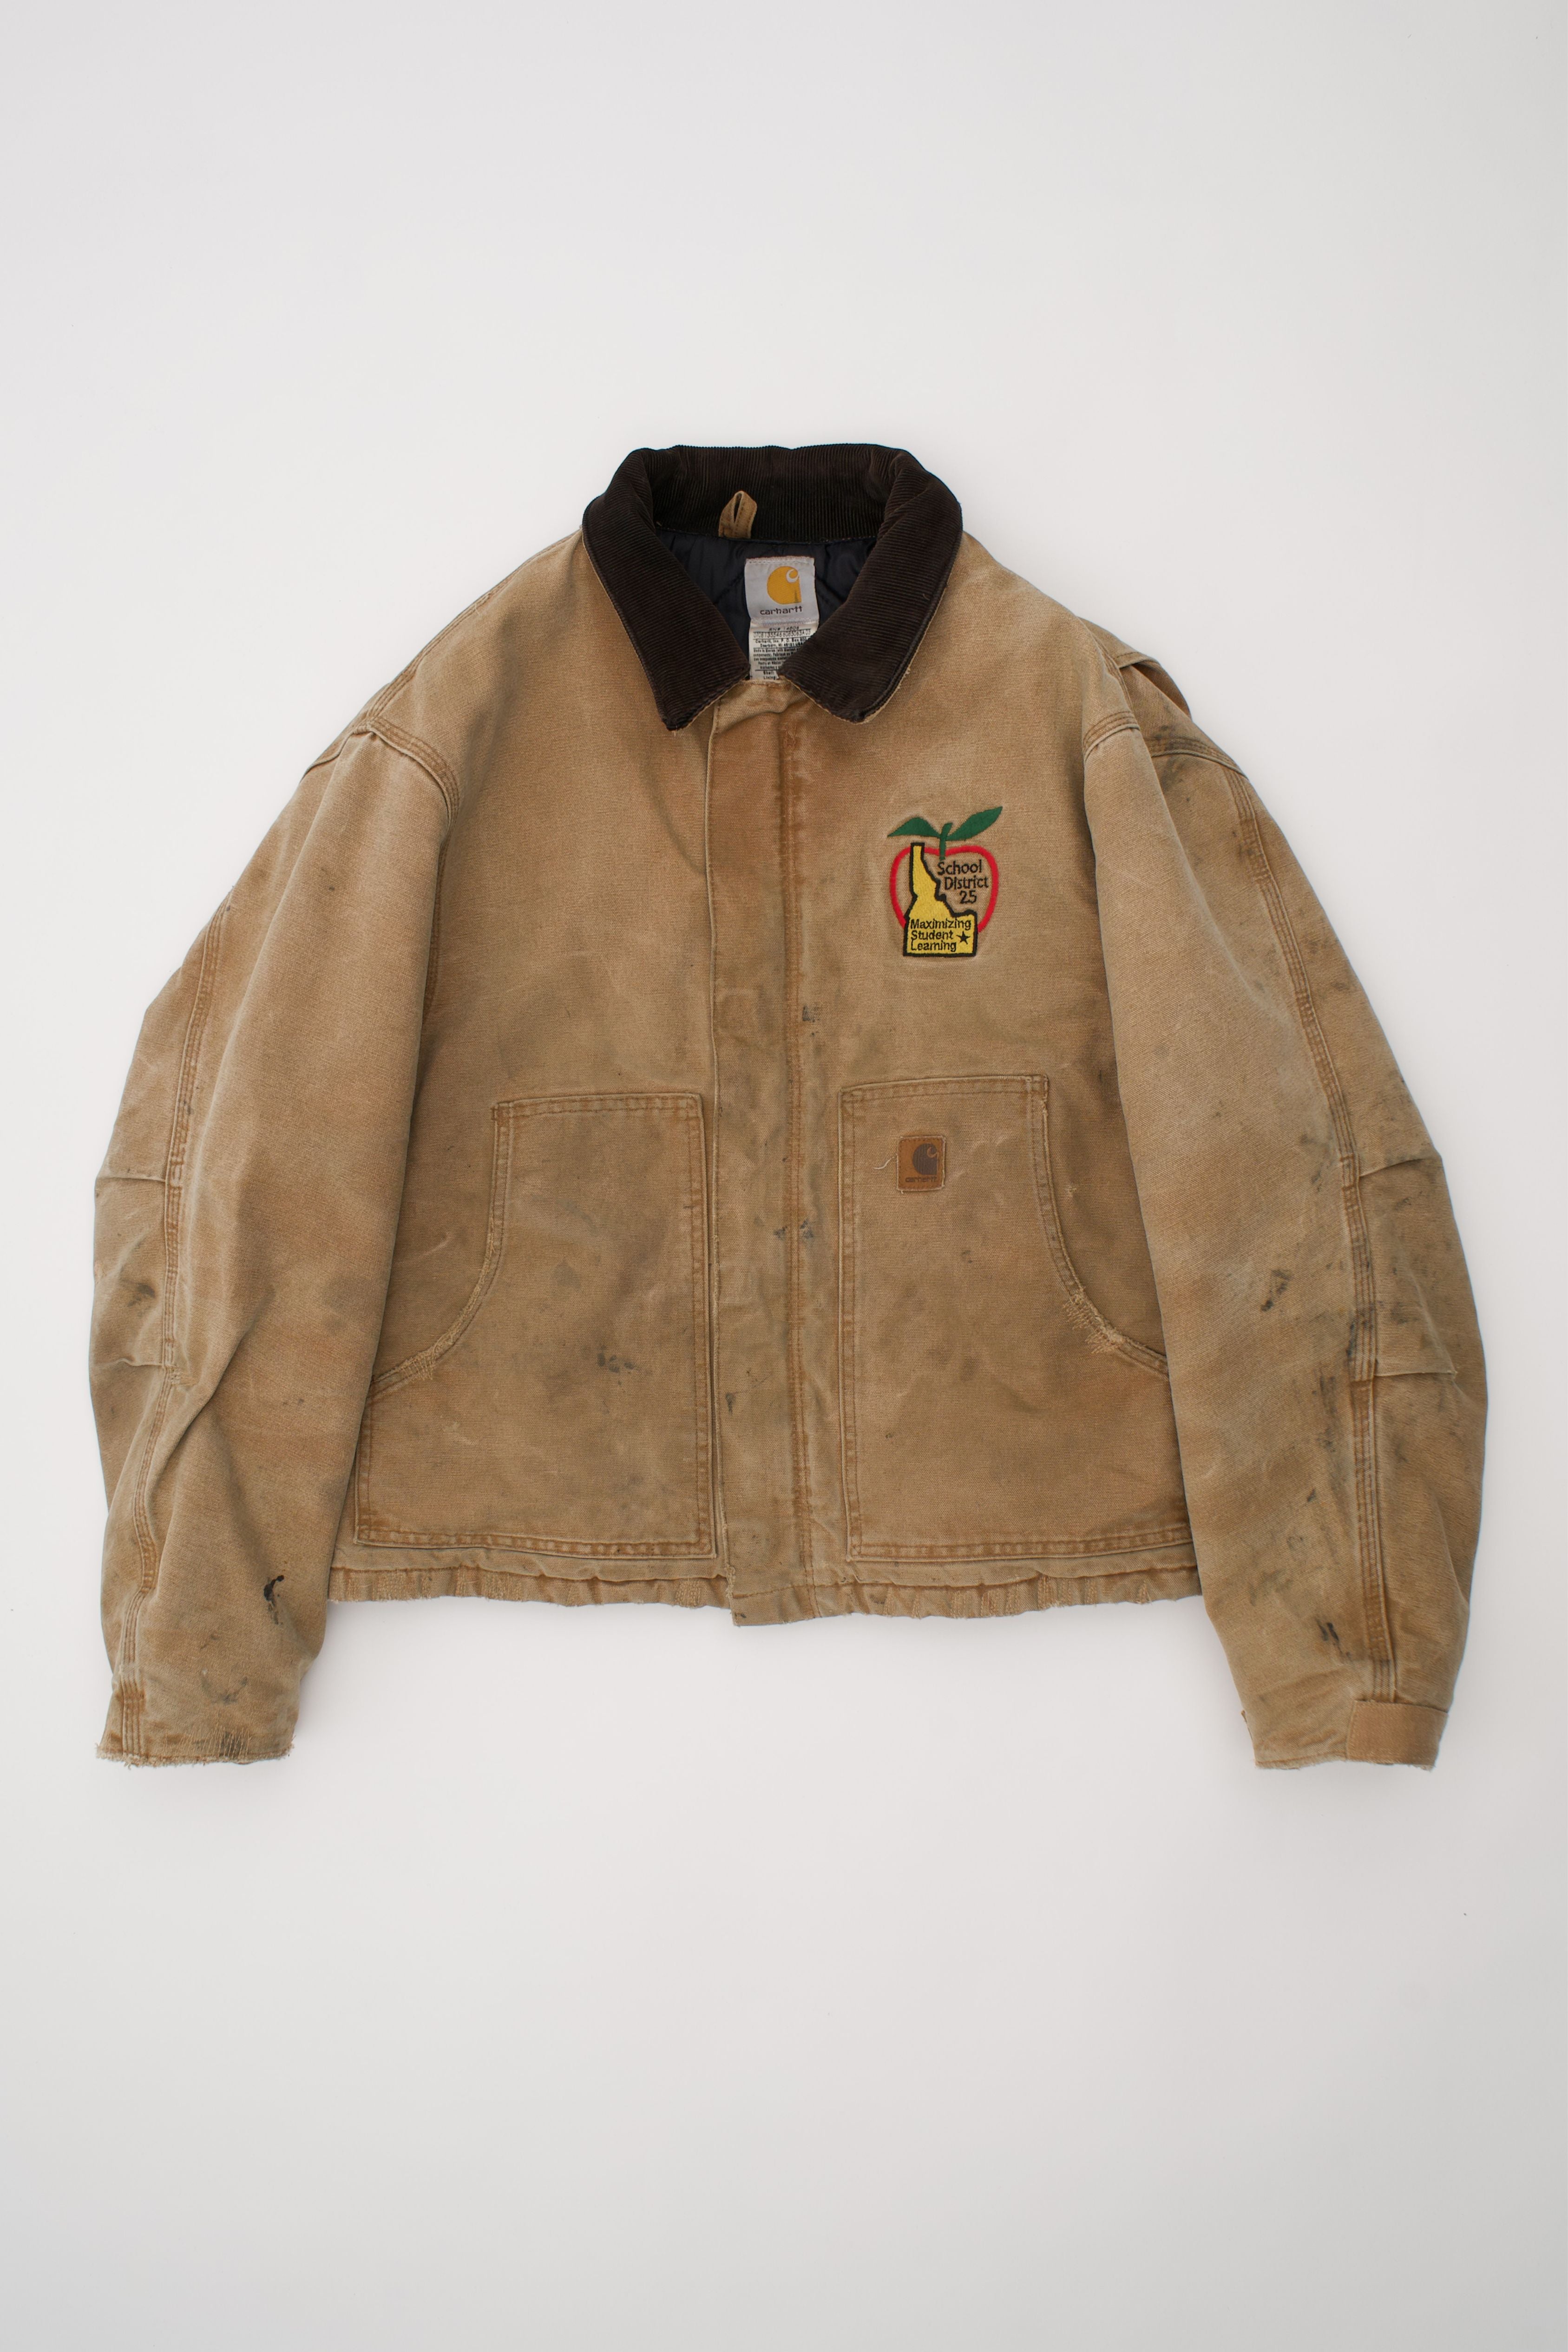 Vintage Carhartt Jacket 1 of 1